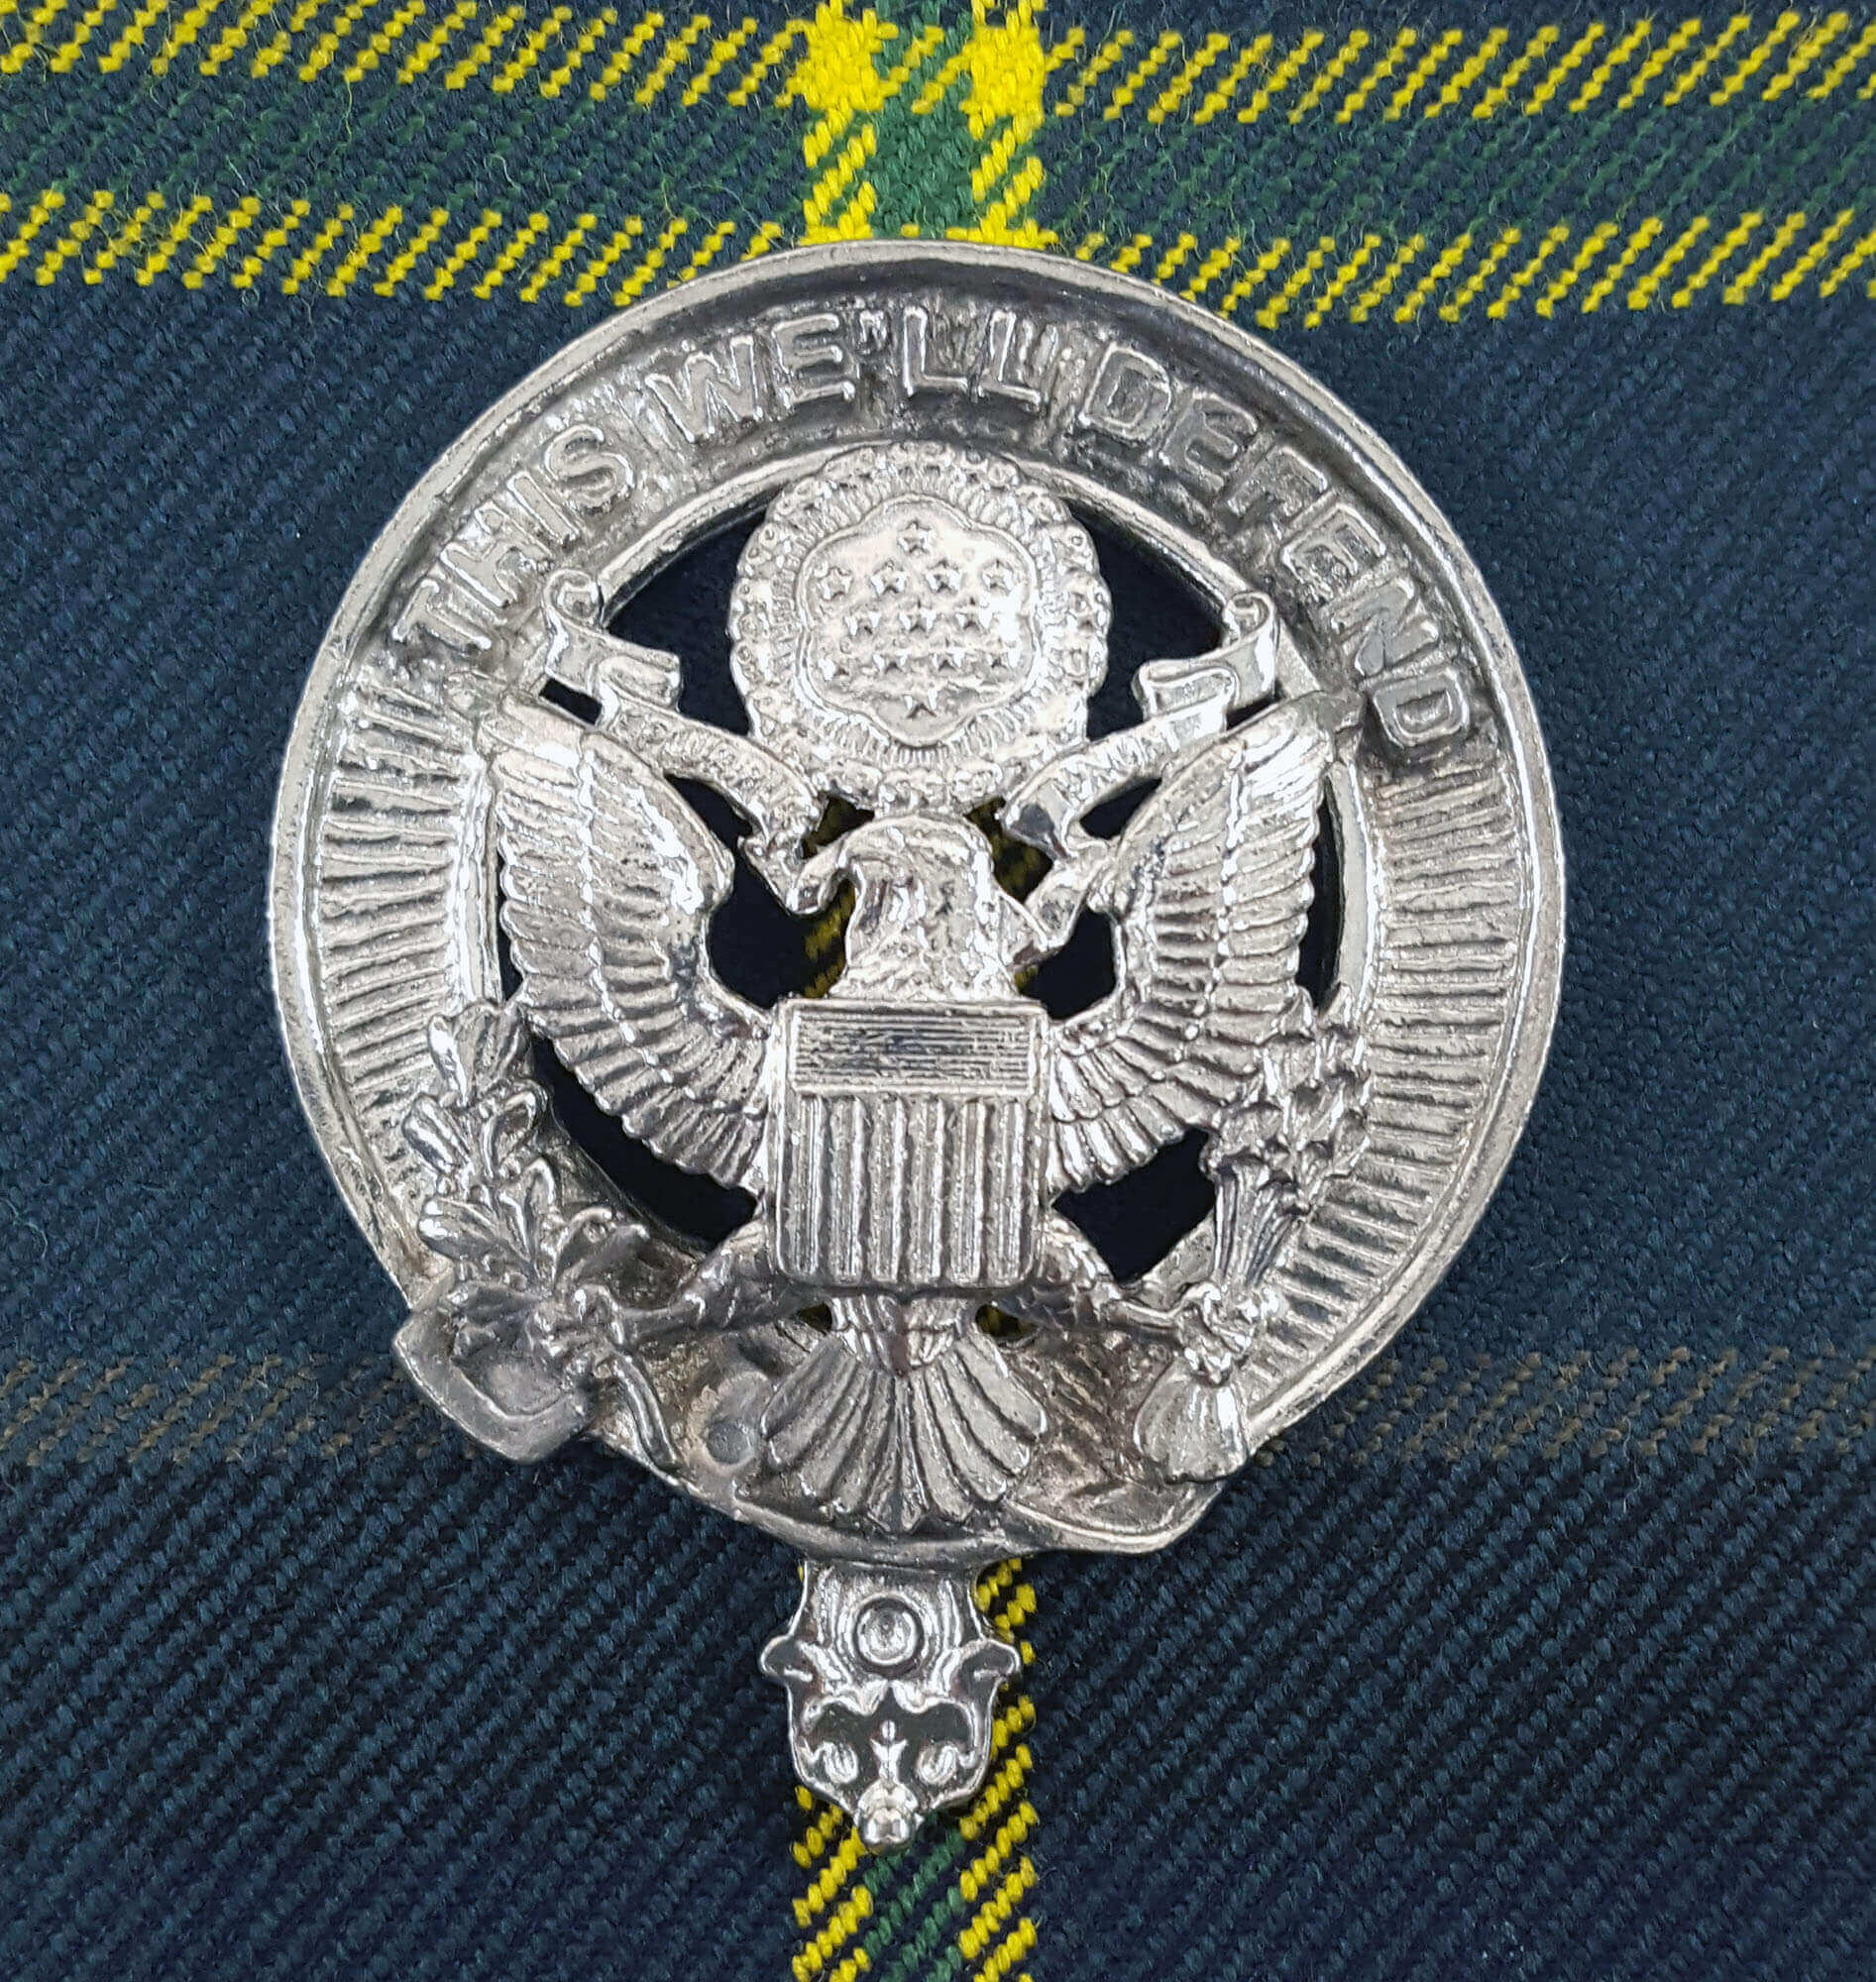 U.S. Army Pewter Cap Badge/Brooch on US Army tartan